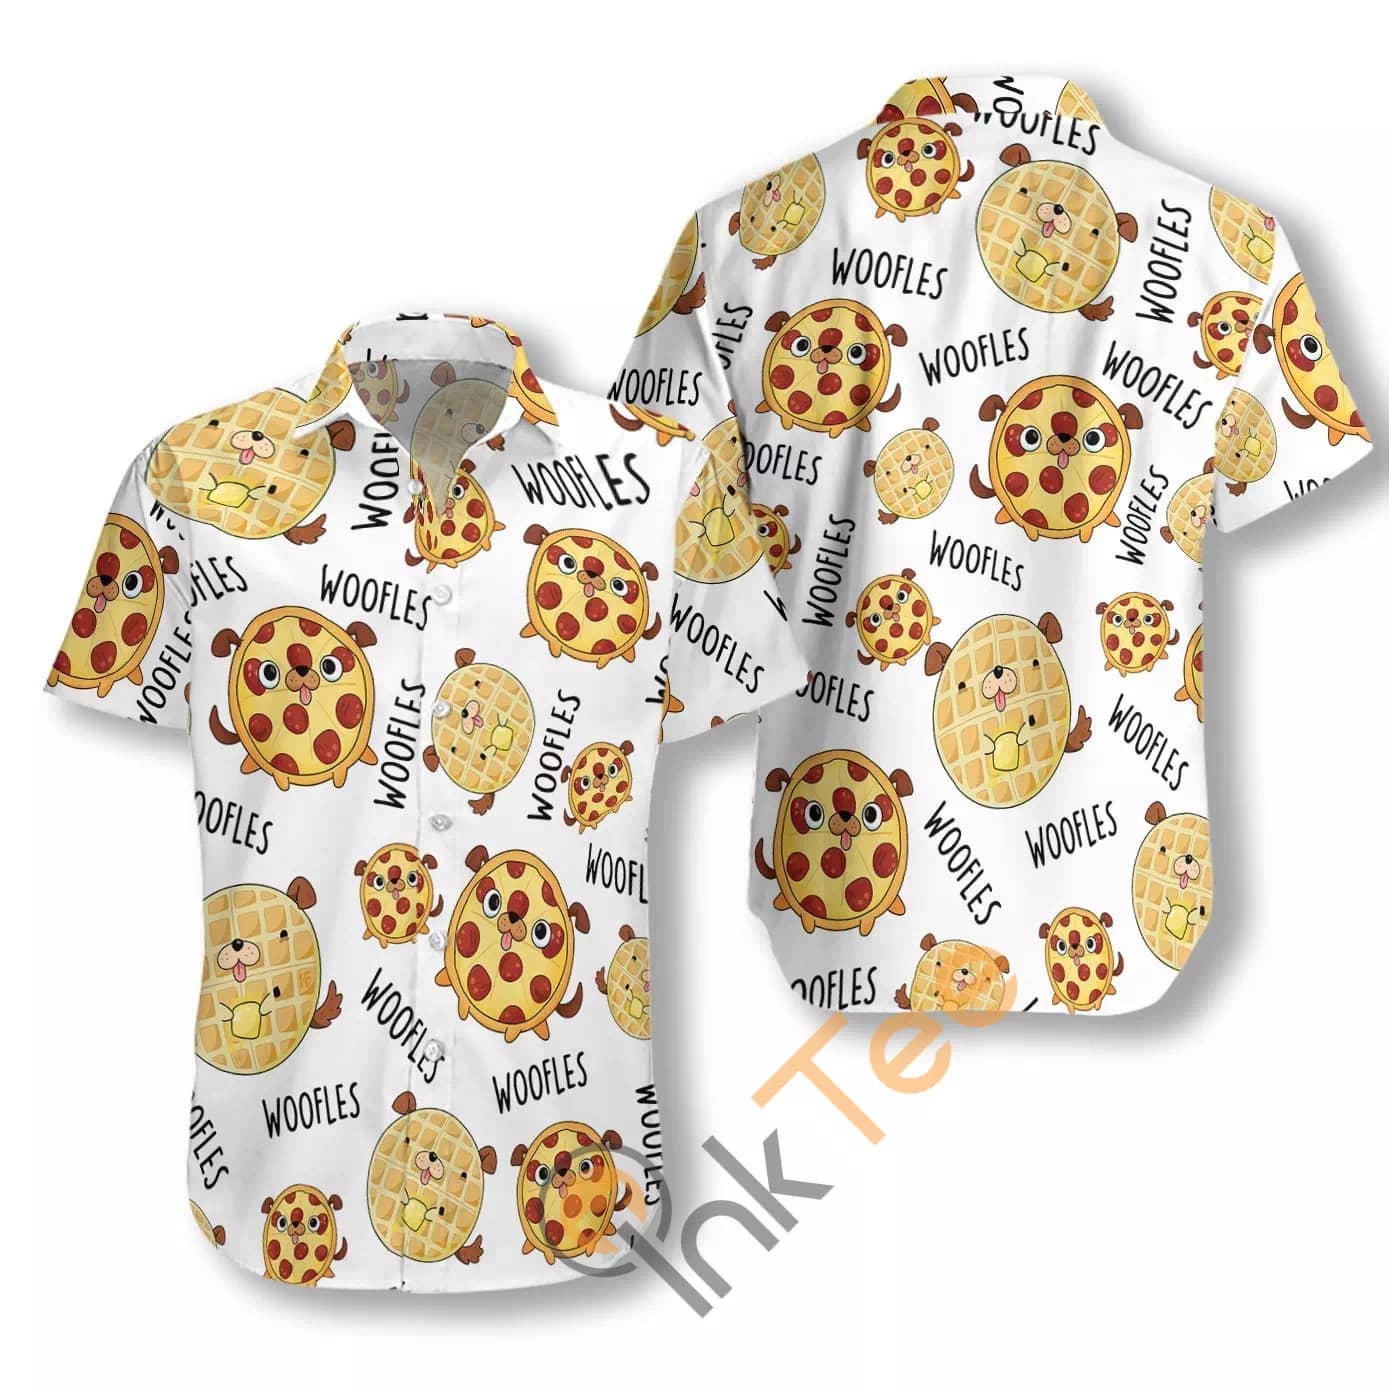 Woofles Pizza And Cake N808 Hawaiian shirts